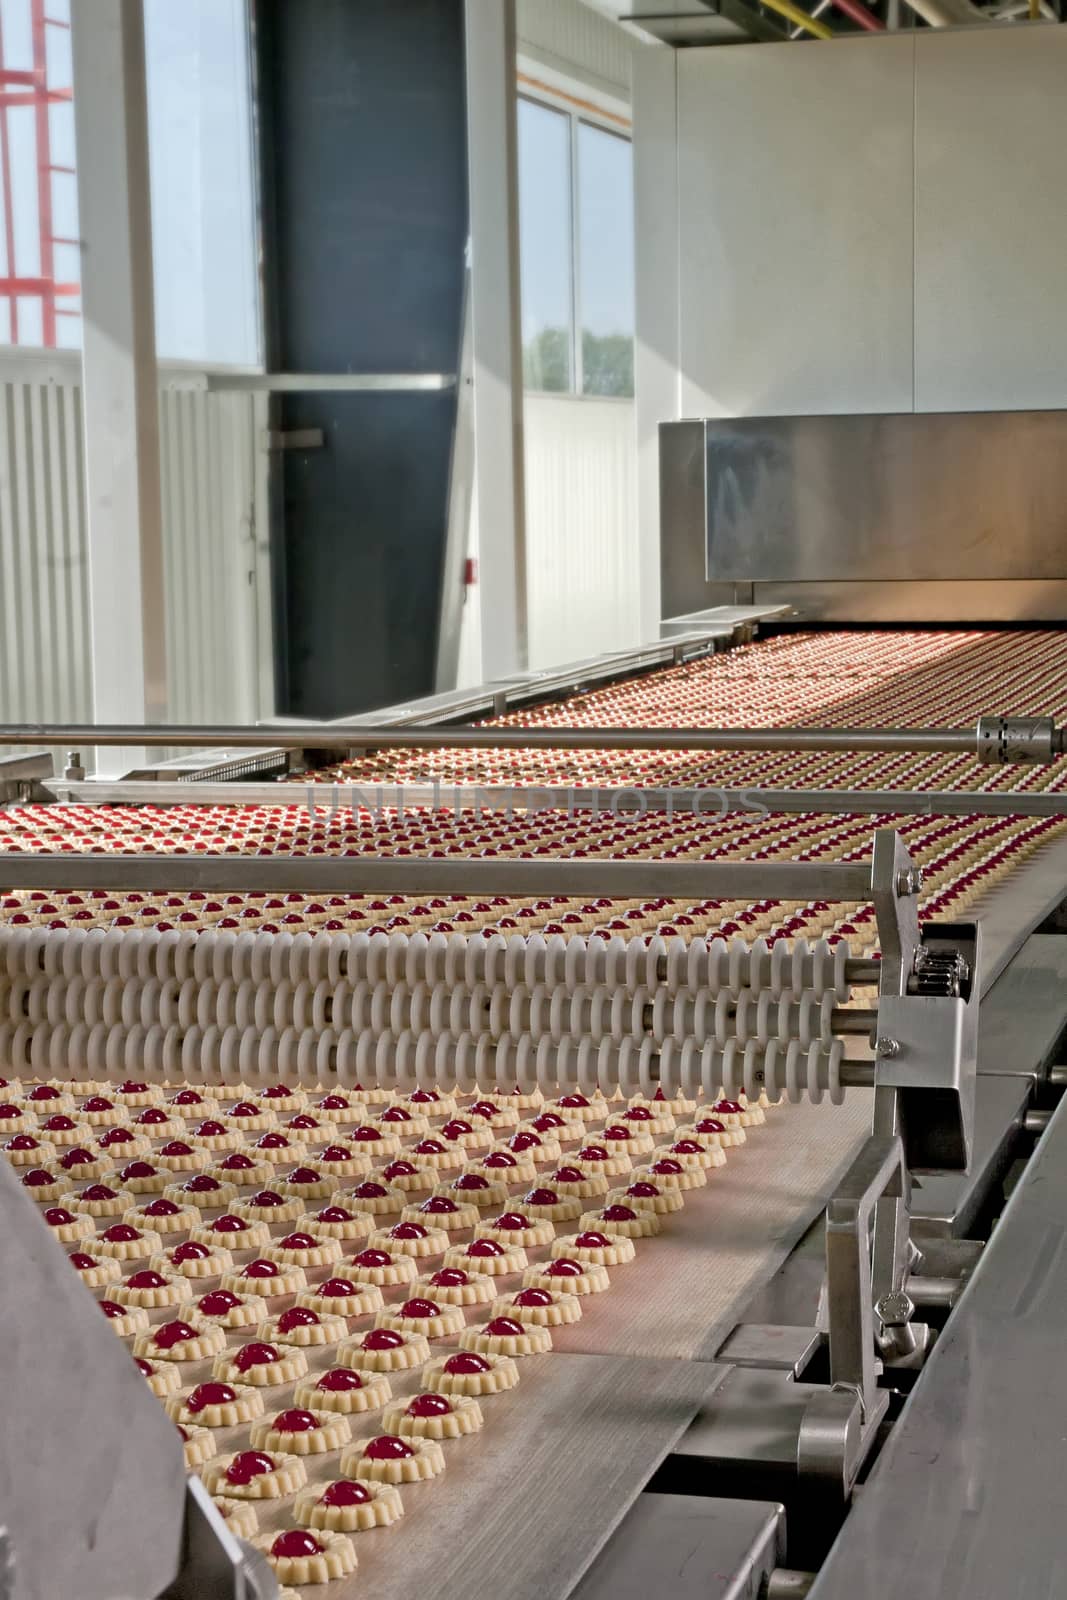 Production of cookies on conveyor